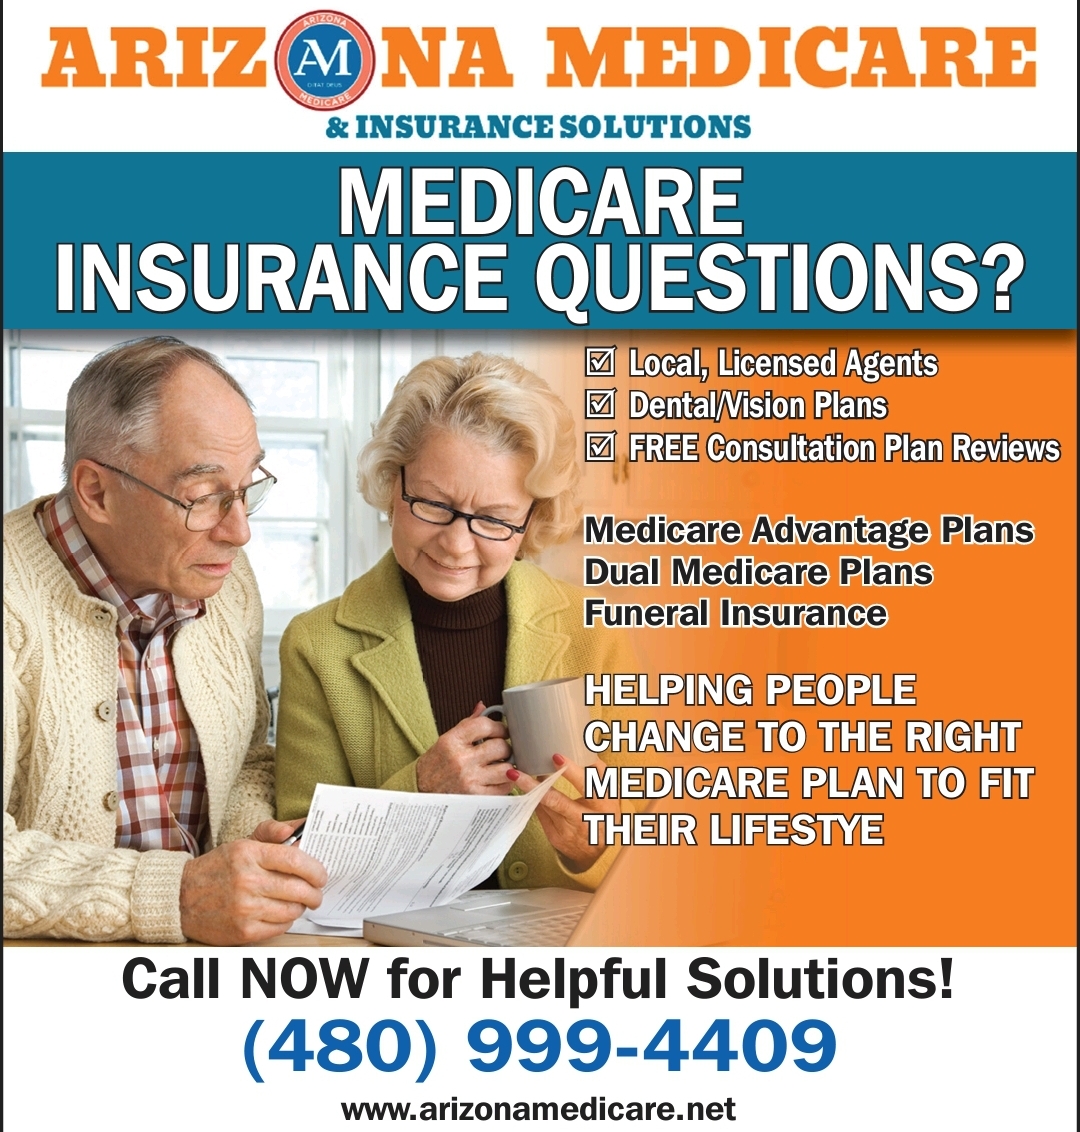 Arizona Medicare & Insurance Solutions